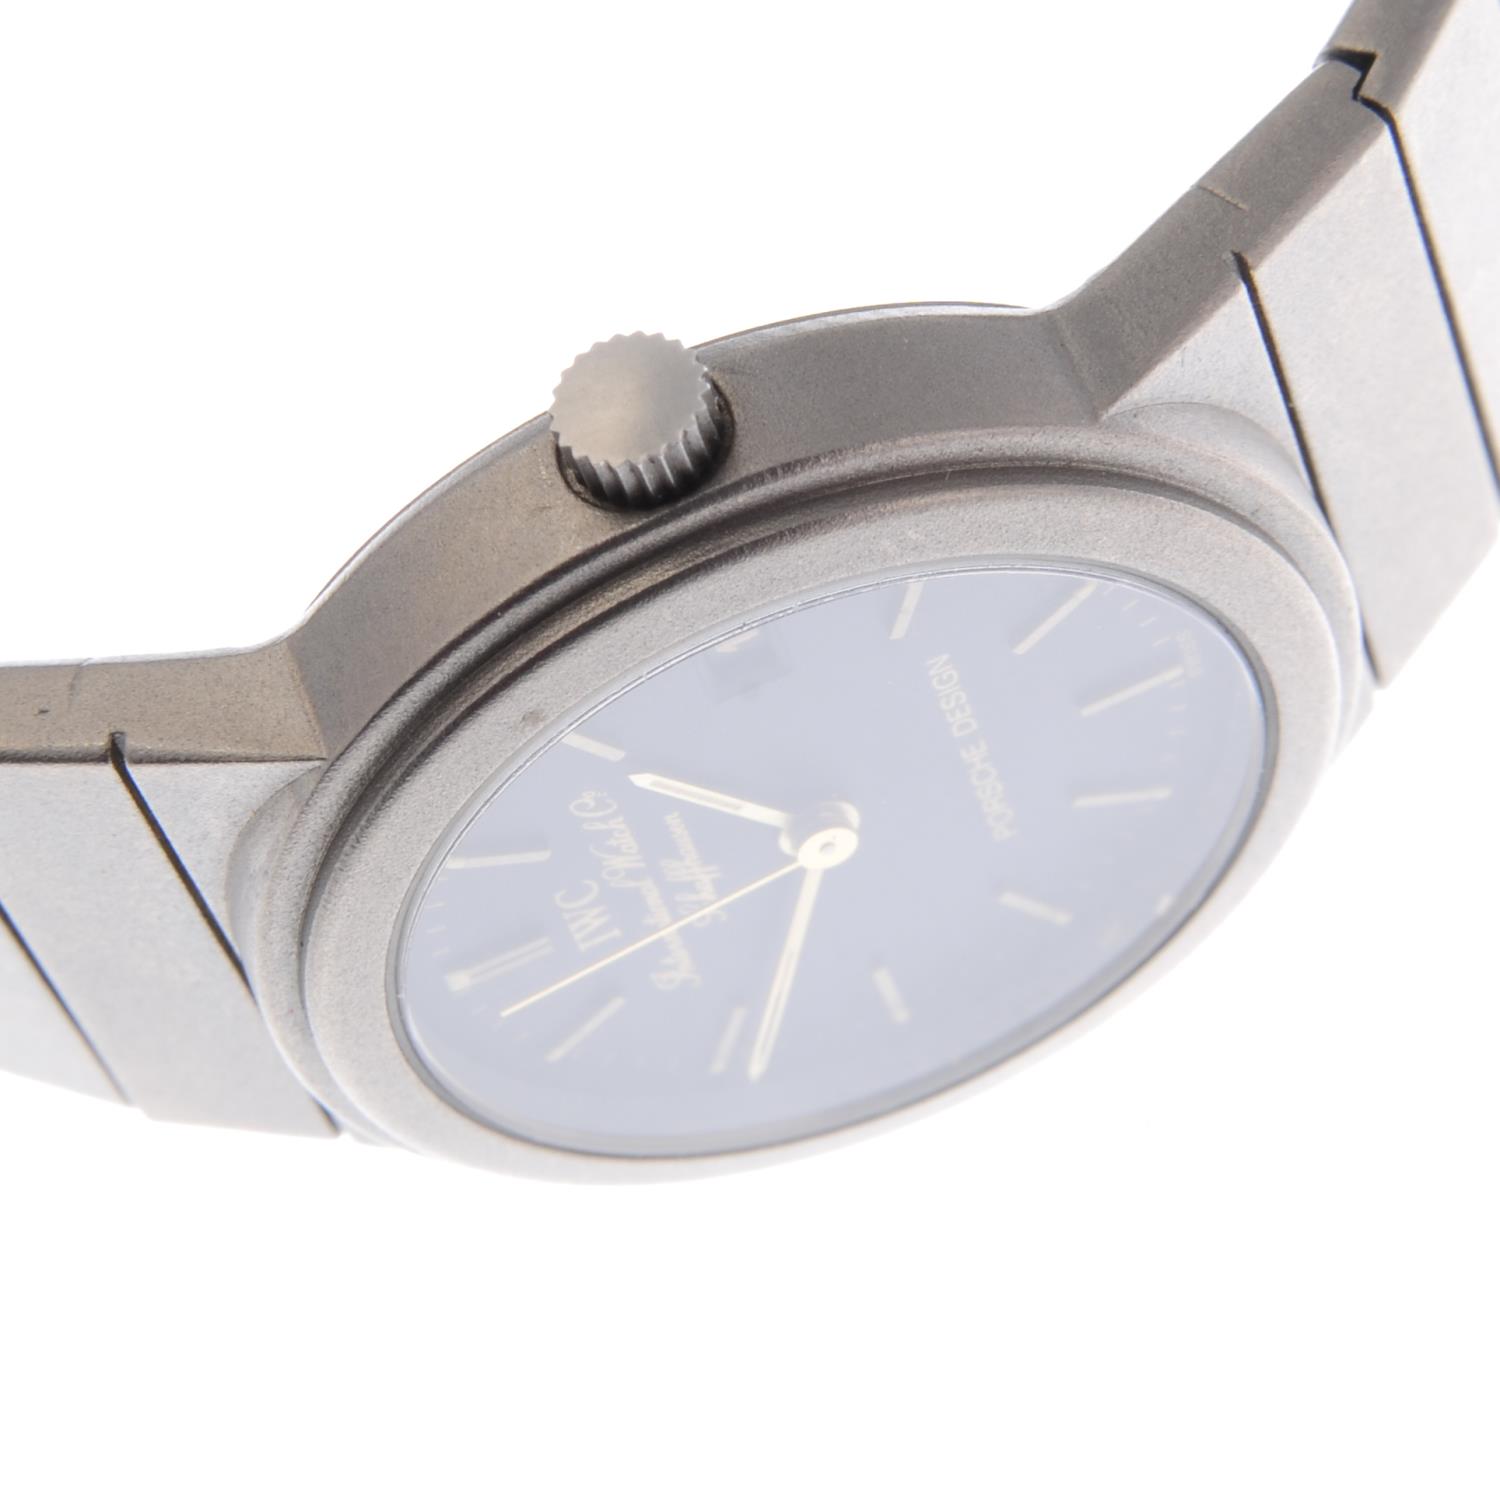 IWC - a lady's Porsche Design bracelet watch. Titanium case. Reference 4517, serial 2316075. - Image 4 of 5